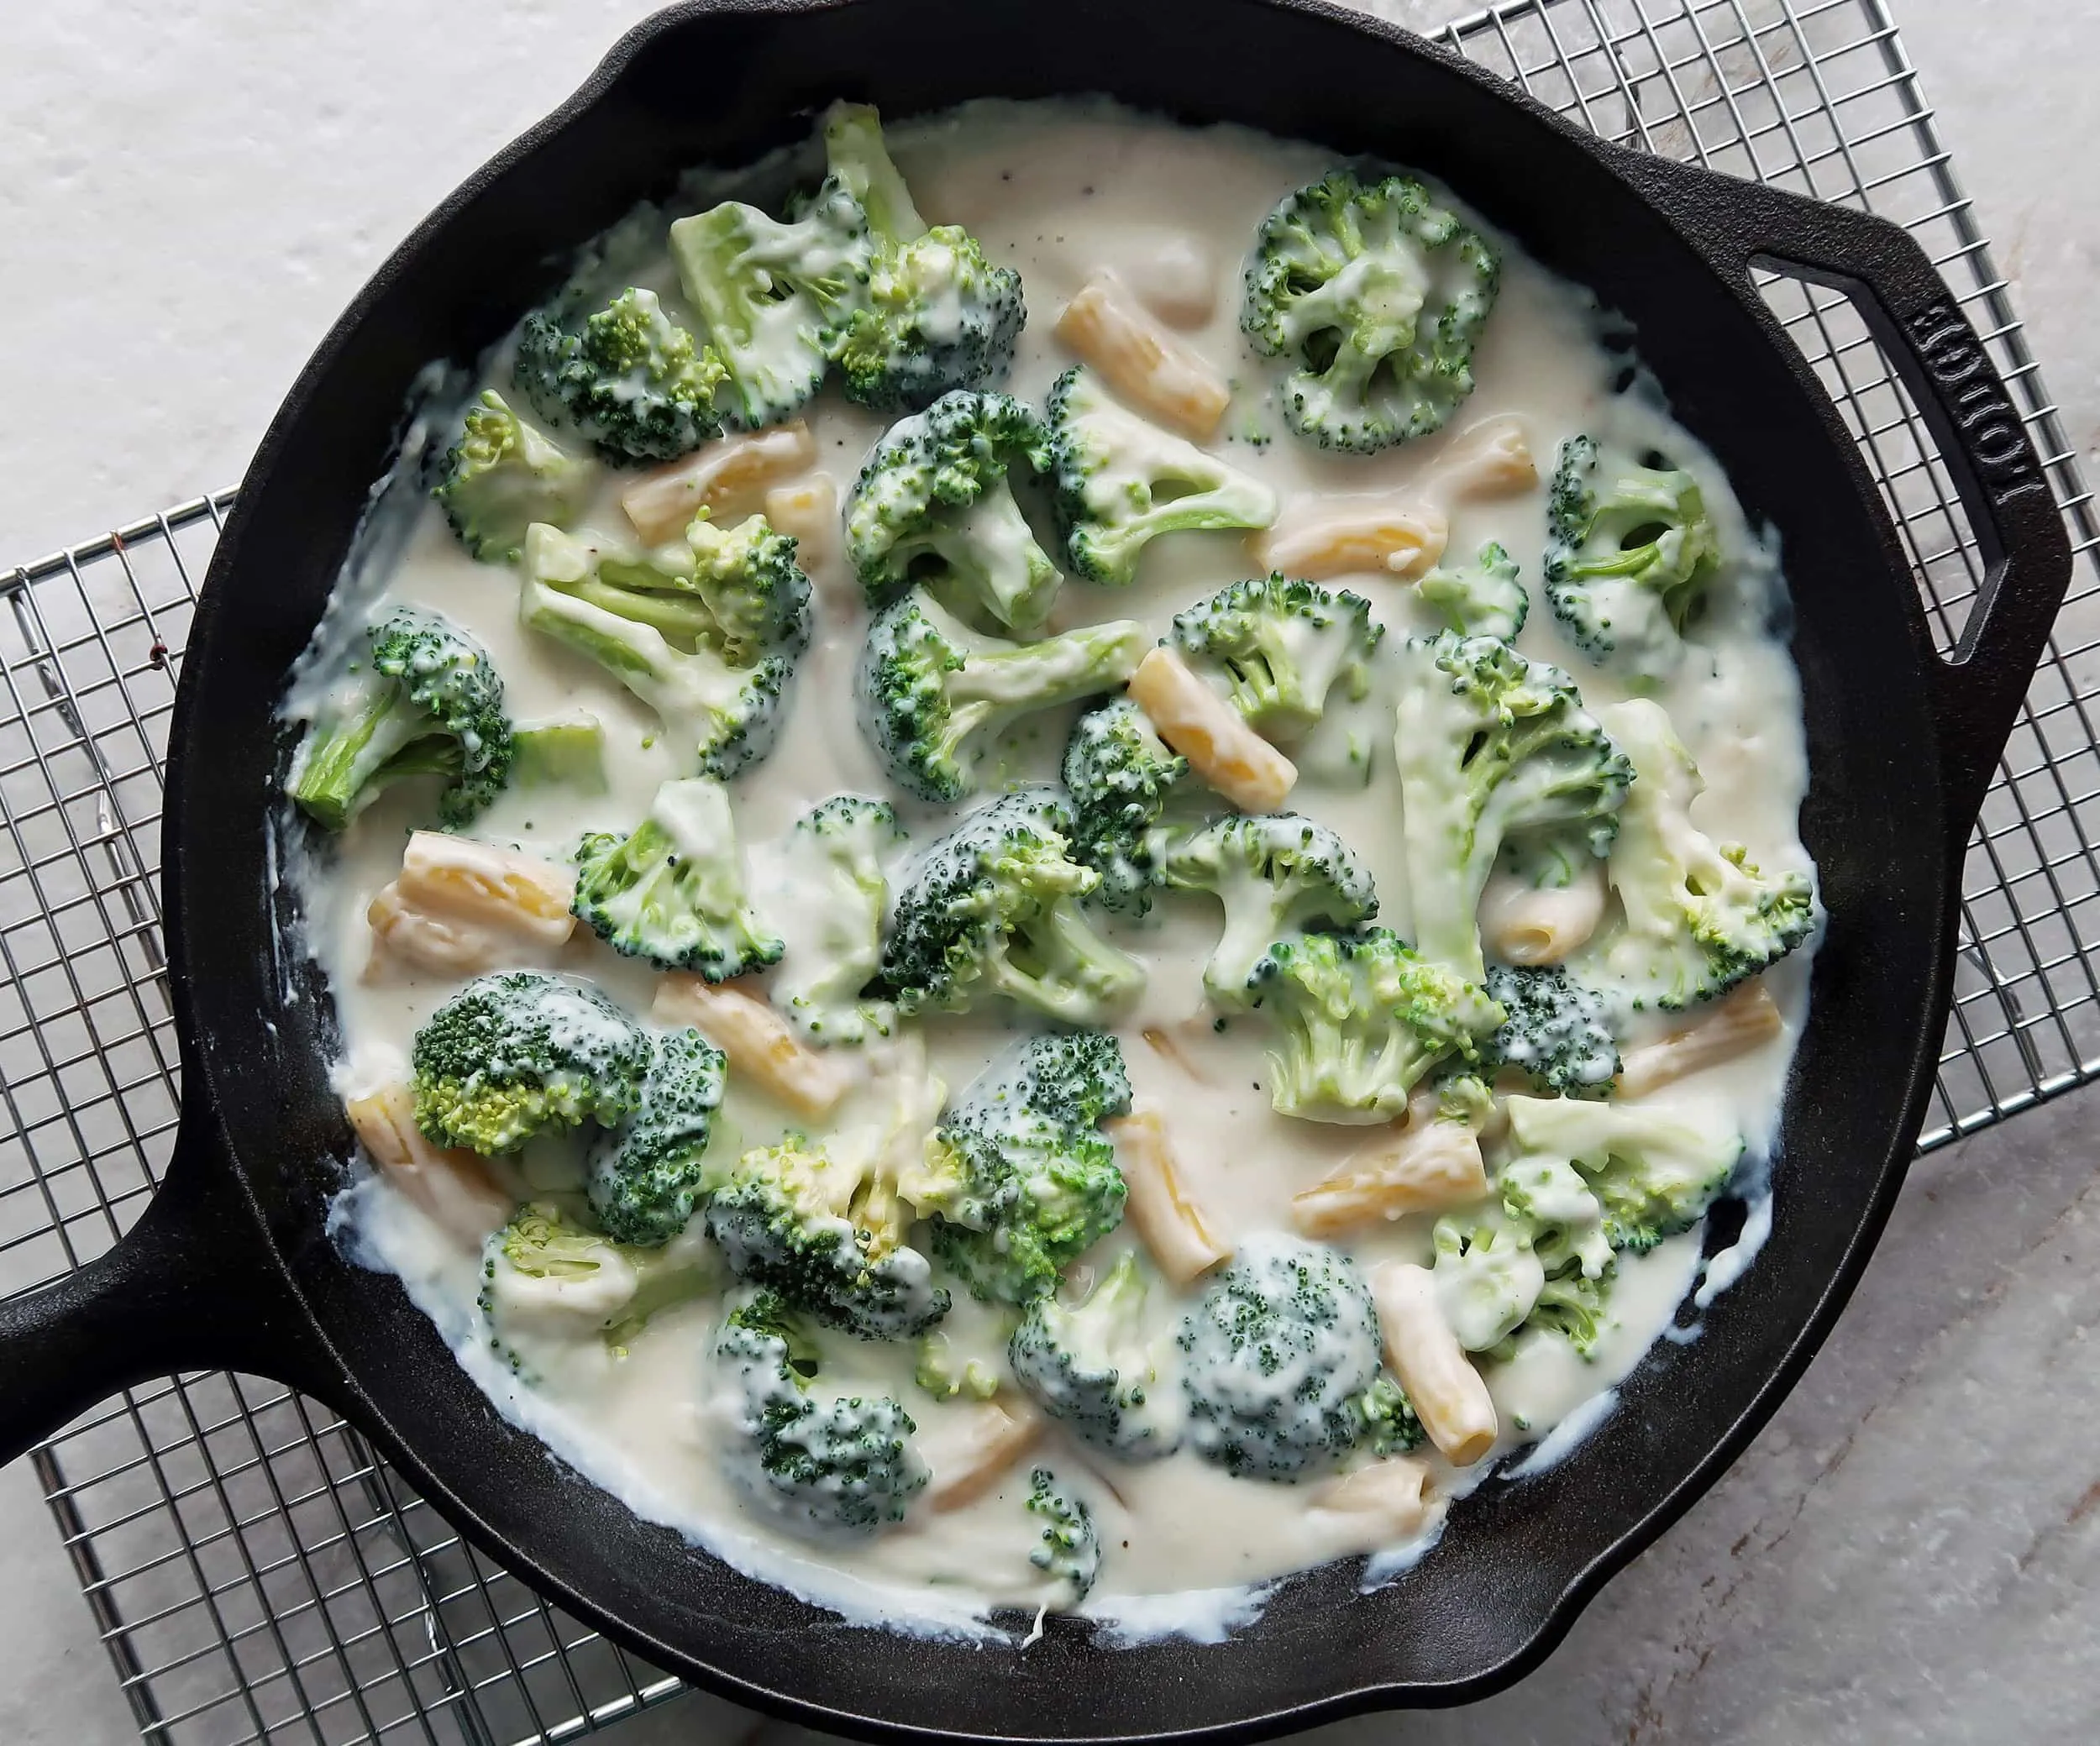 Broccoli, pasta, and milk in a skillet.